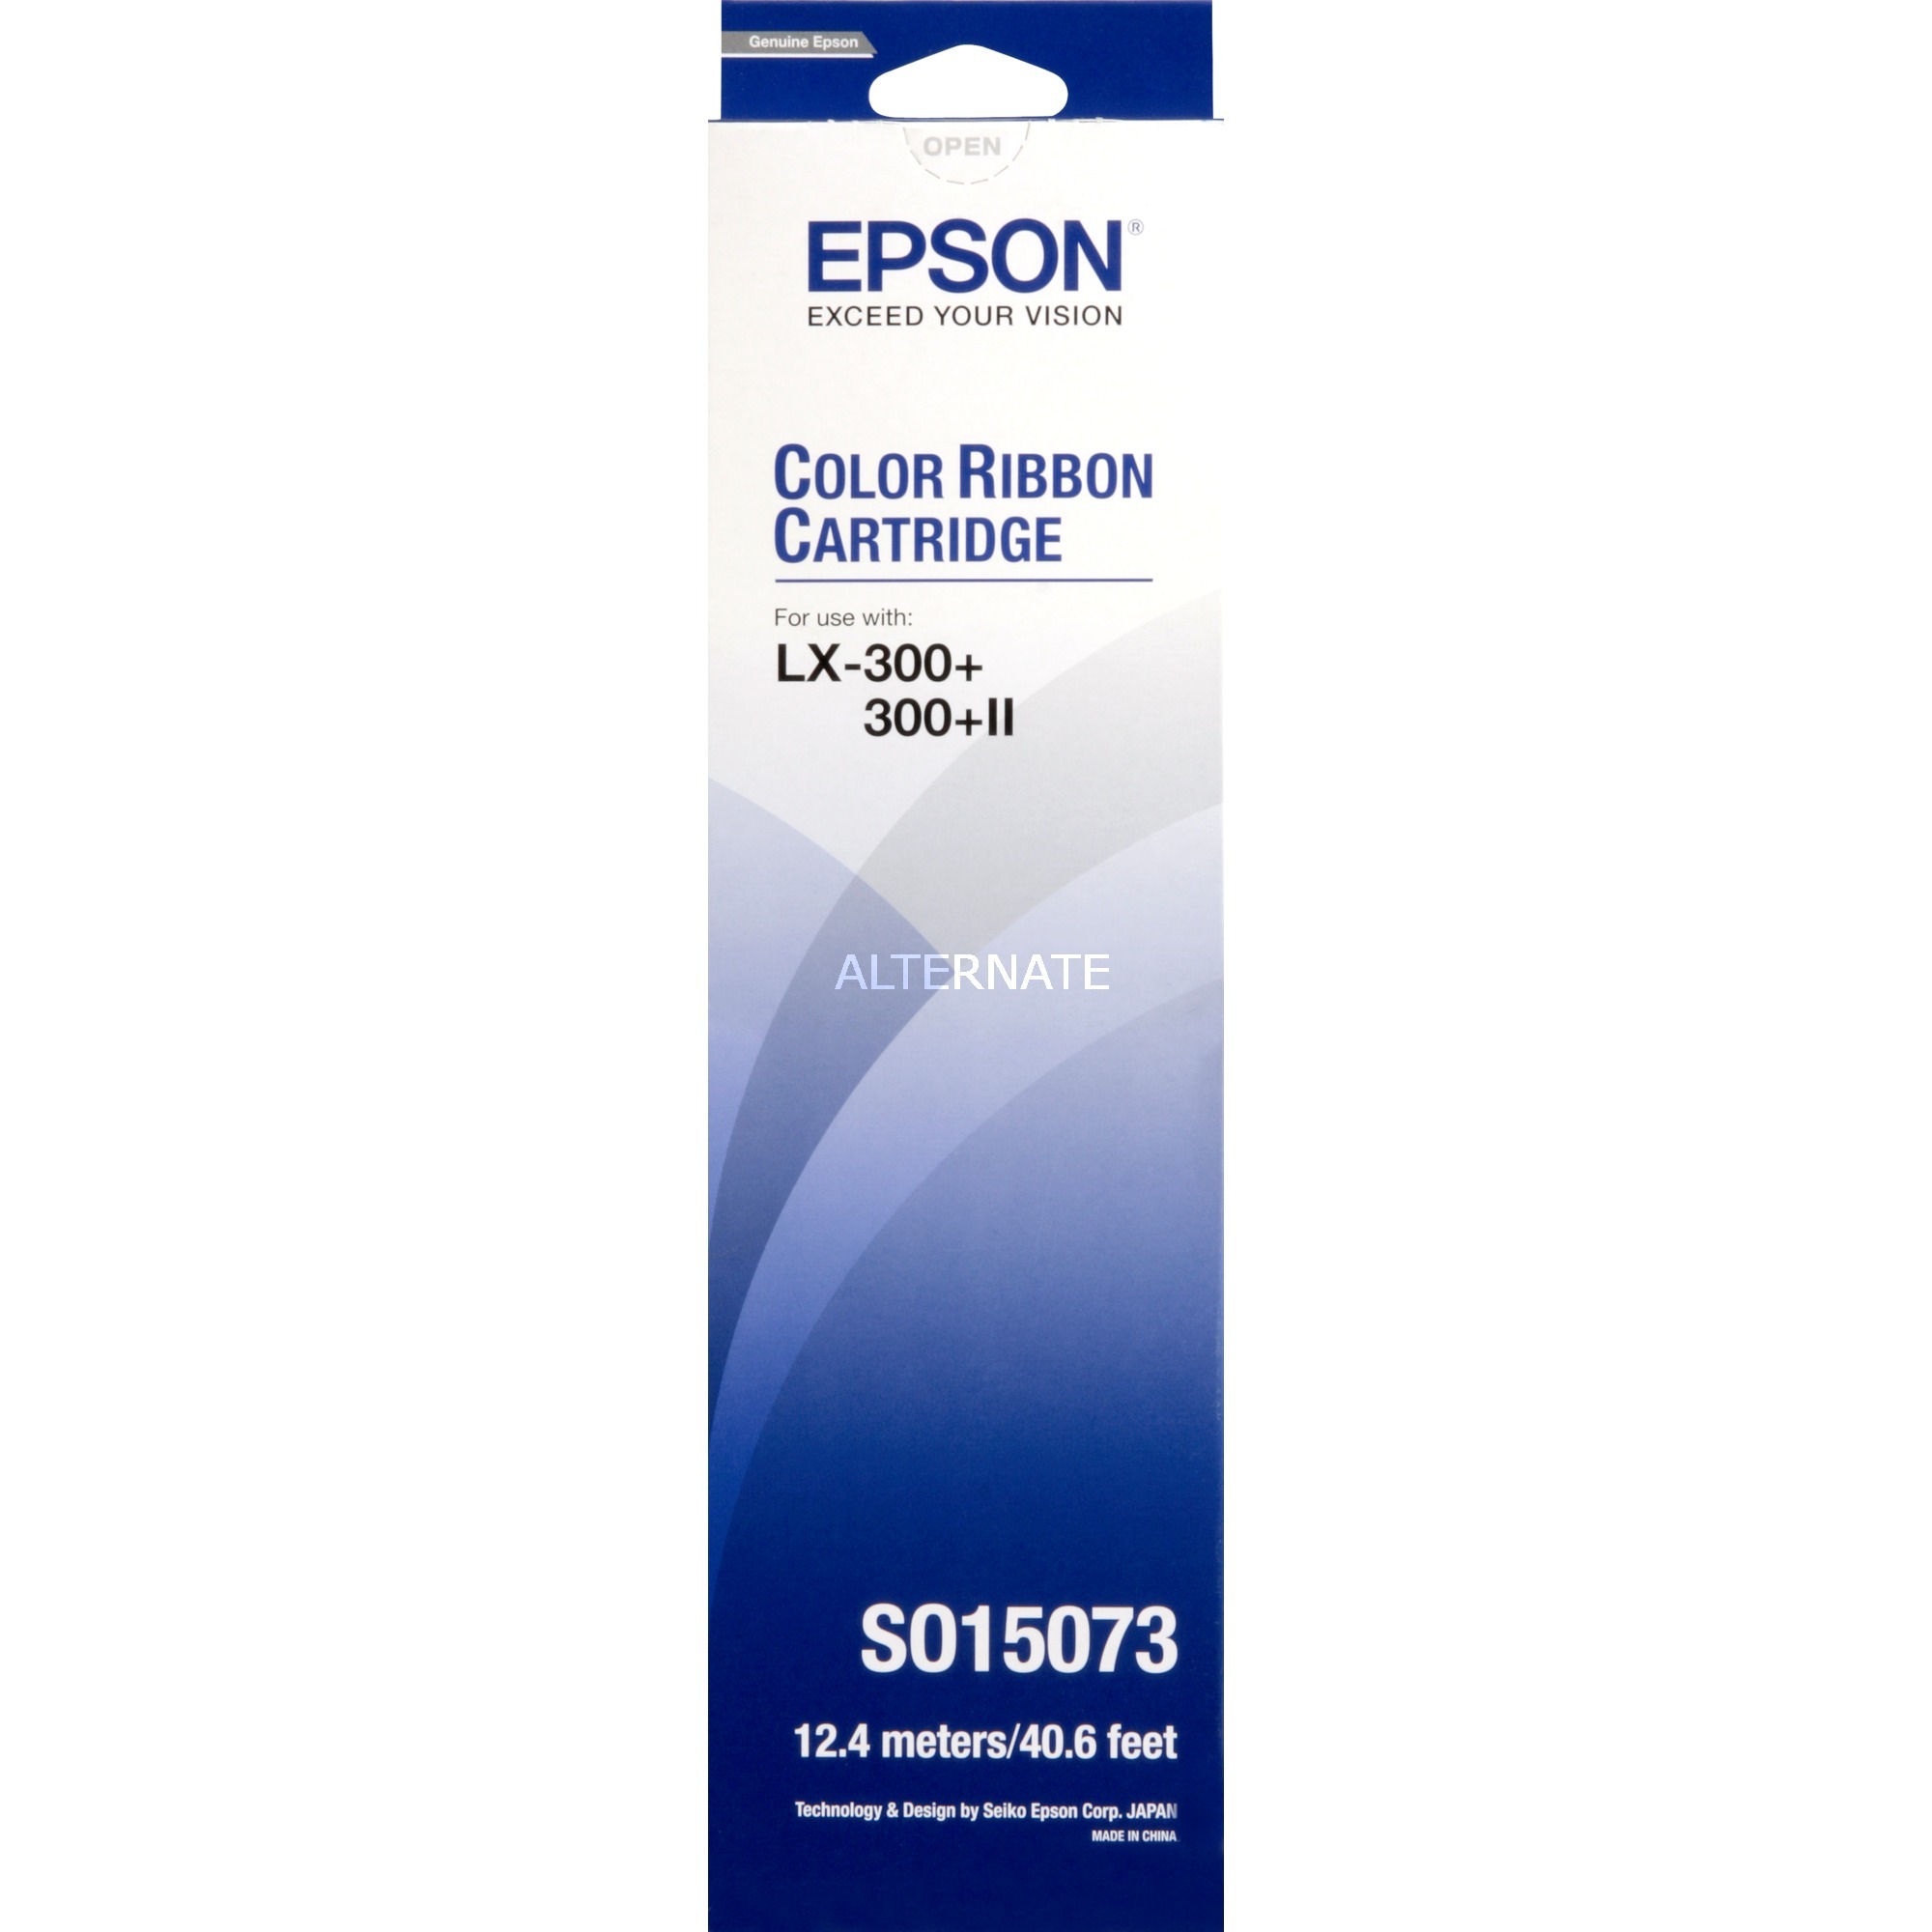 EPSON LX-300 Color Ribbon